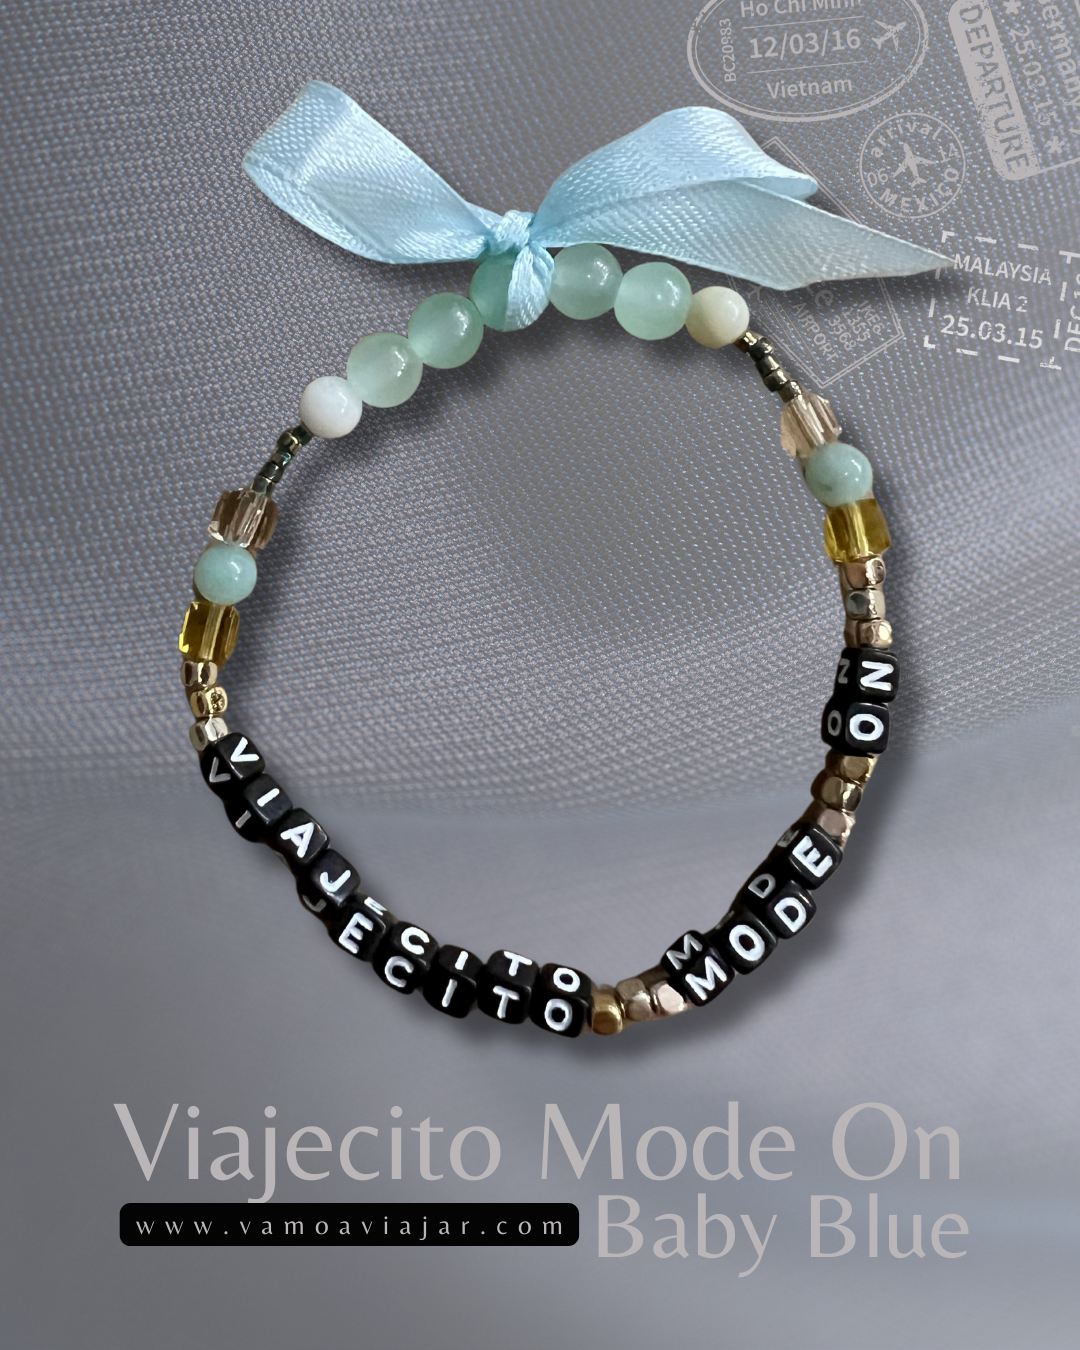 Bracelet: Viajecito Mode On Baby Blue